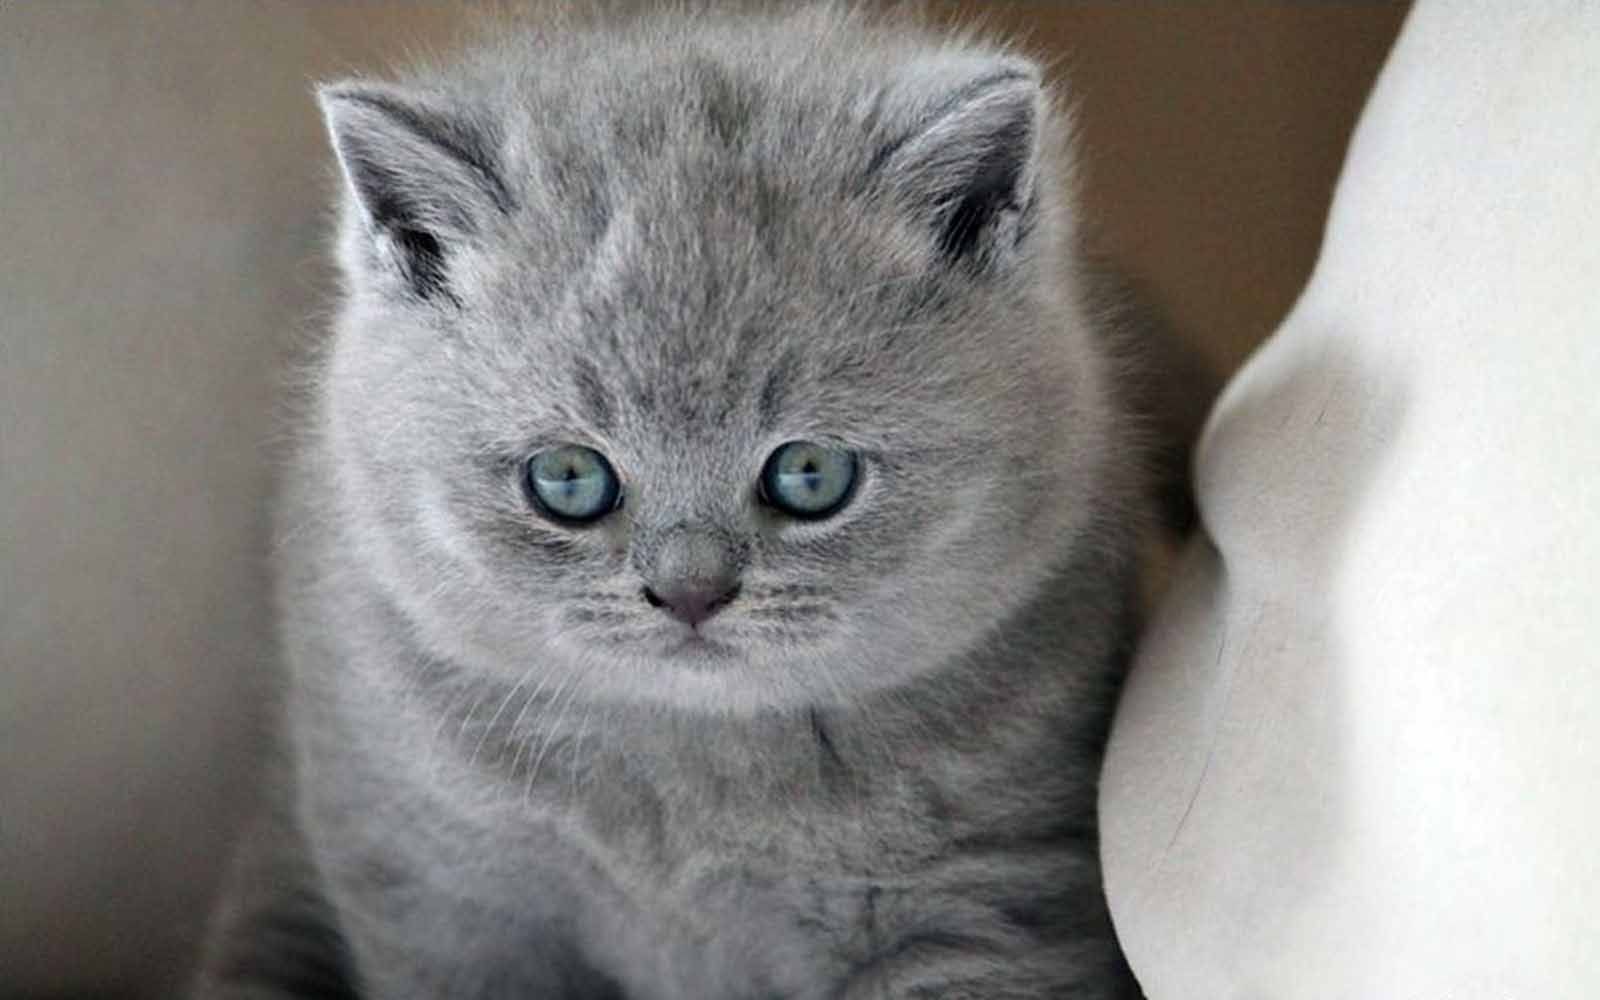 Кличка британца. Красивое имя коту британцу серому. Имена для котят британцев серого цвета. Имя для кота британца мальчика серого цвета. Кличка для британского кота серого цвета.